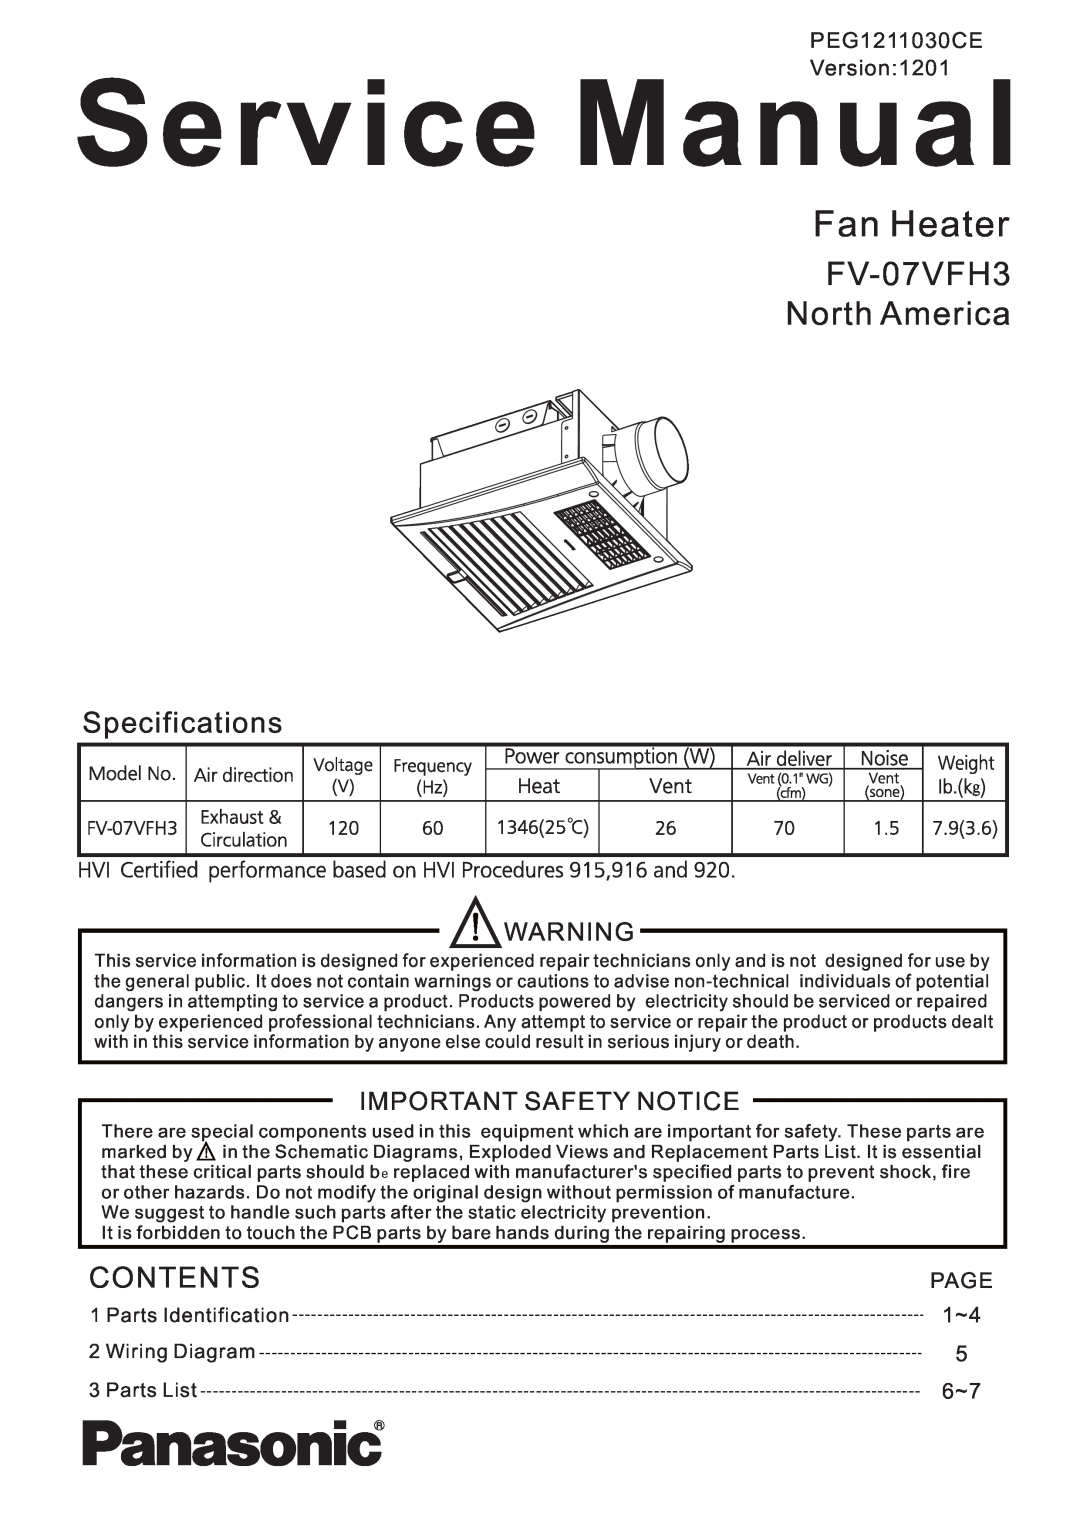 Panasonic FV-07VFH3 service manual Specifications, Contents, PEG1211030CE Version, Page, Fan Heater 